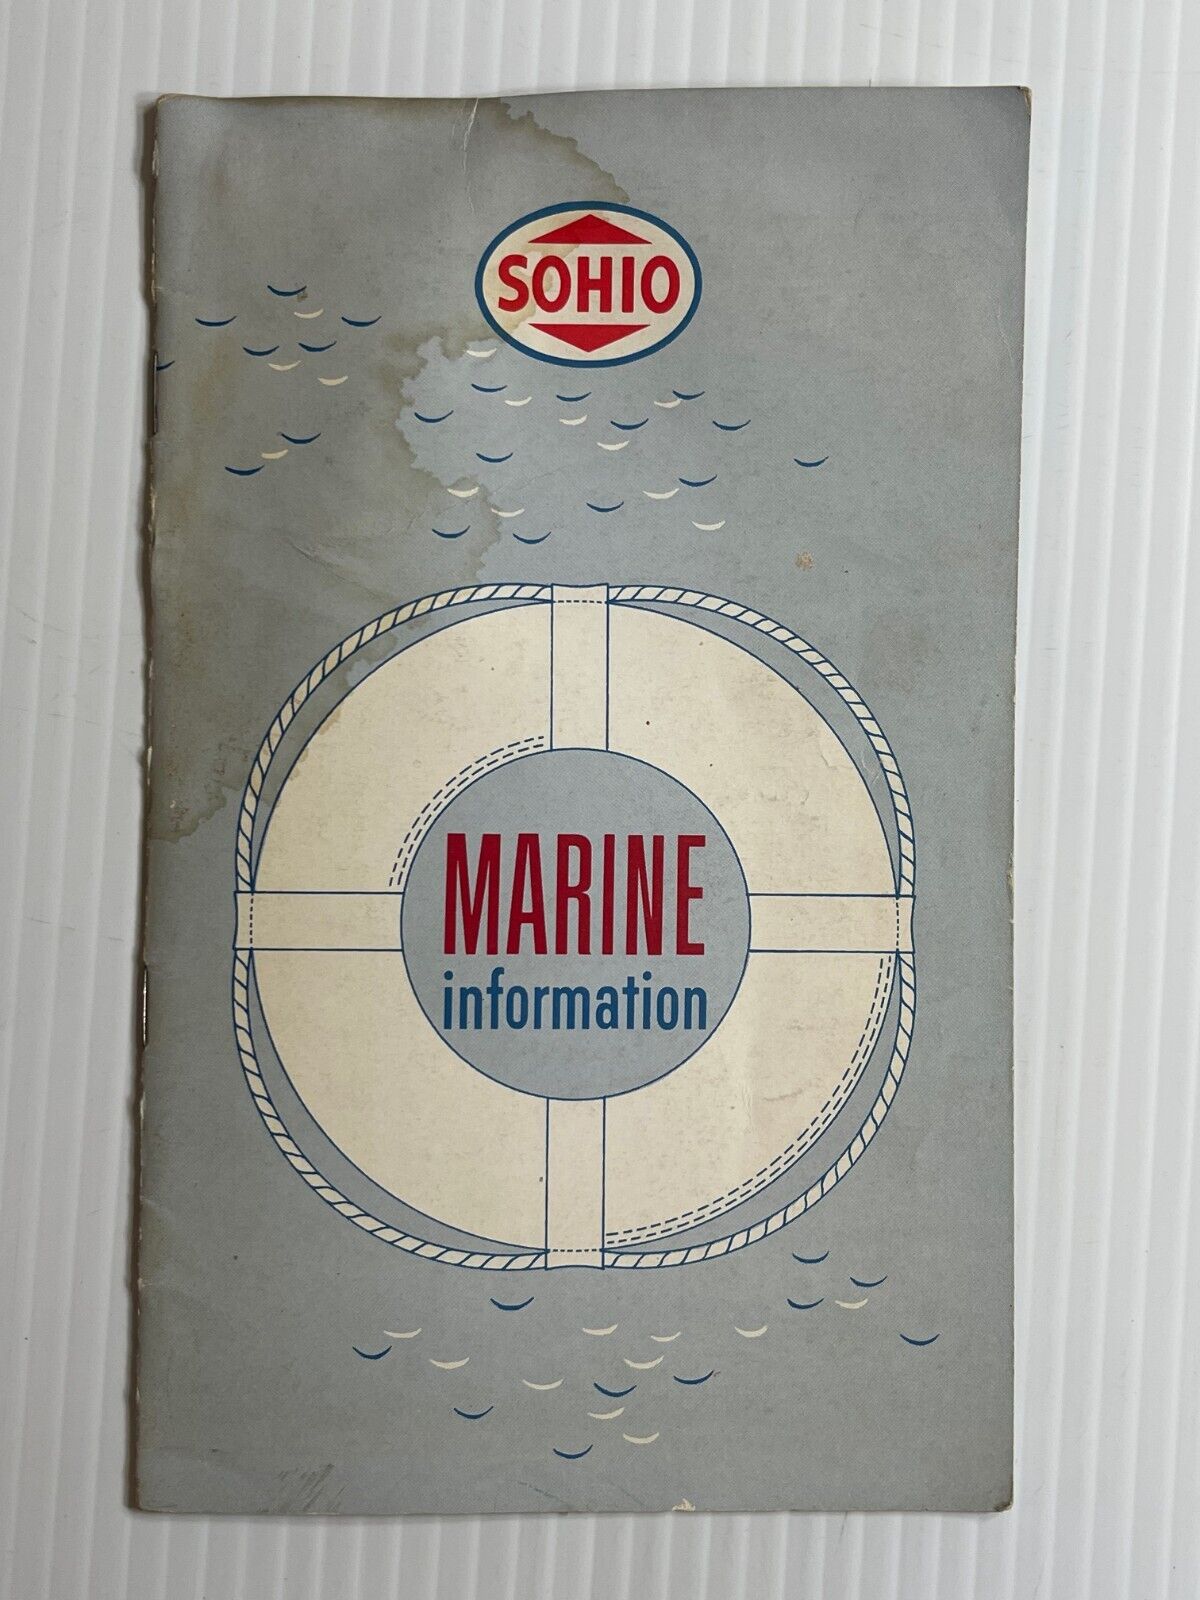 Vintage 1960s - SOHIO Marine Information Booklet - SOHIO Gasoline and Oils